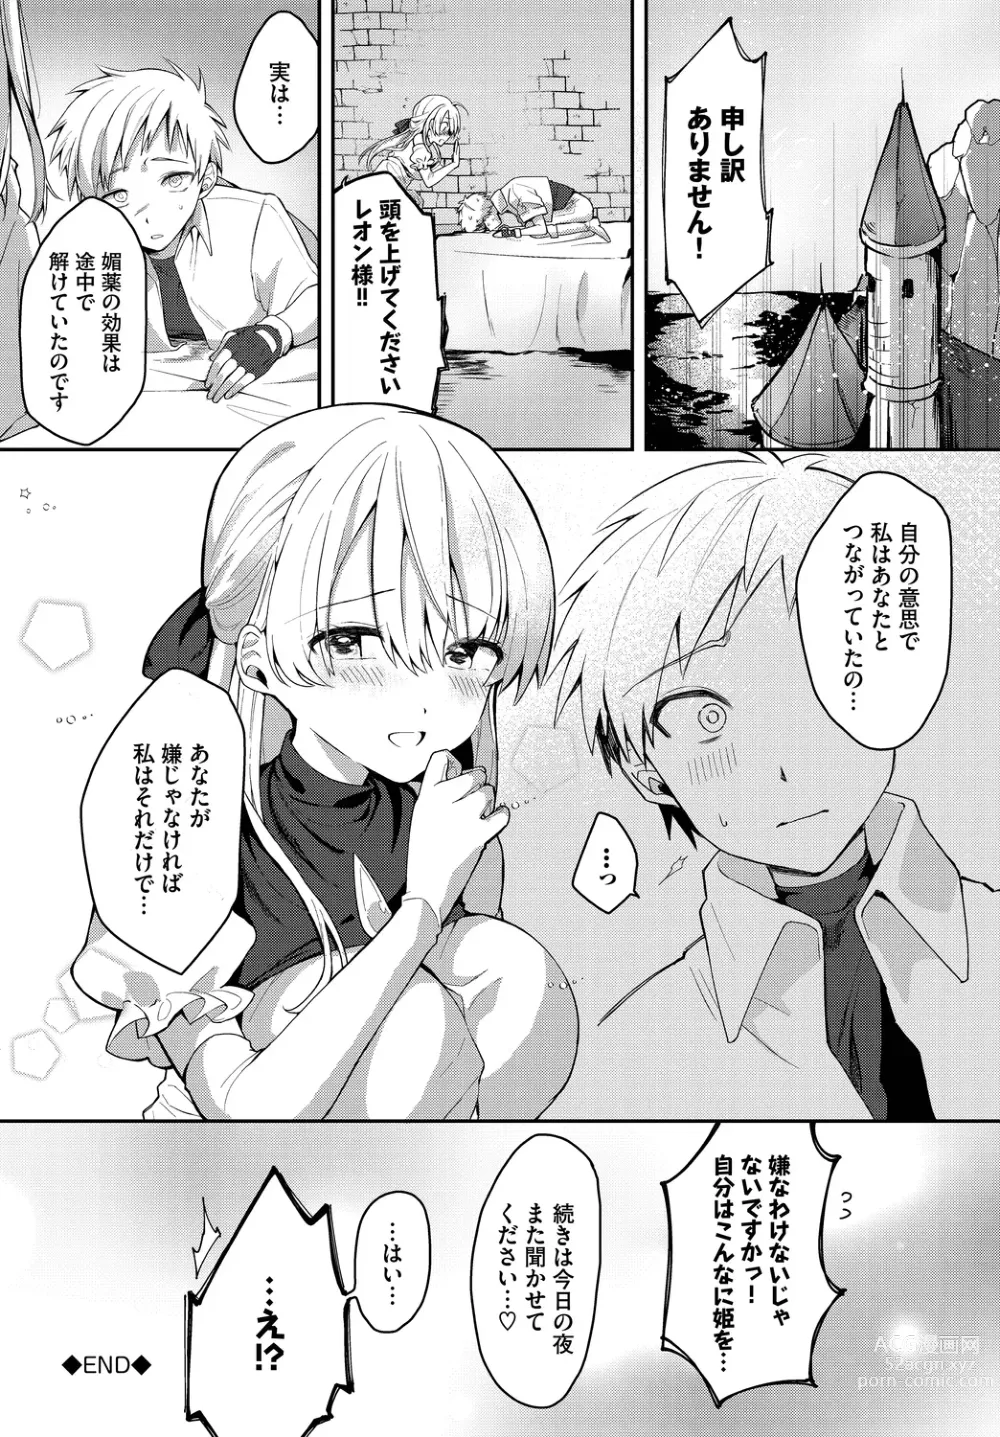 Page 22 of manga Koi-in Rhapsody